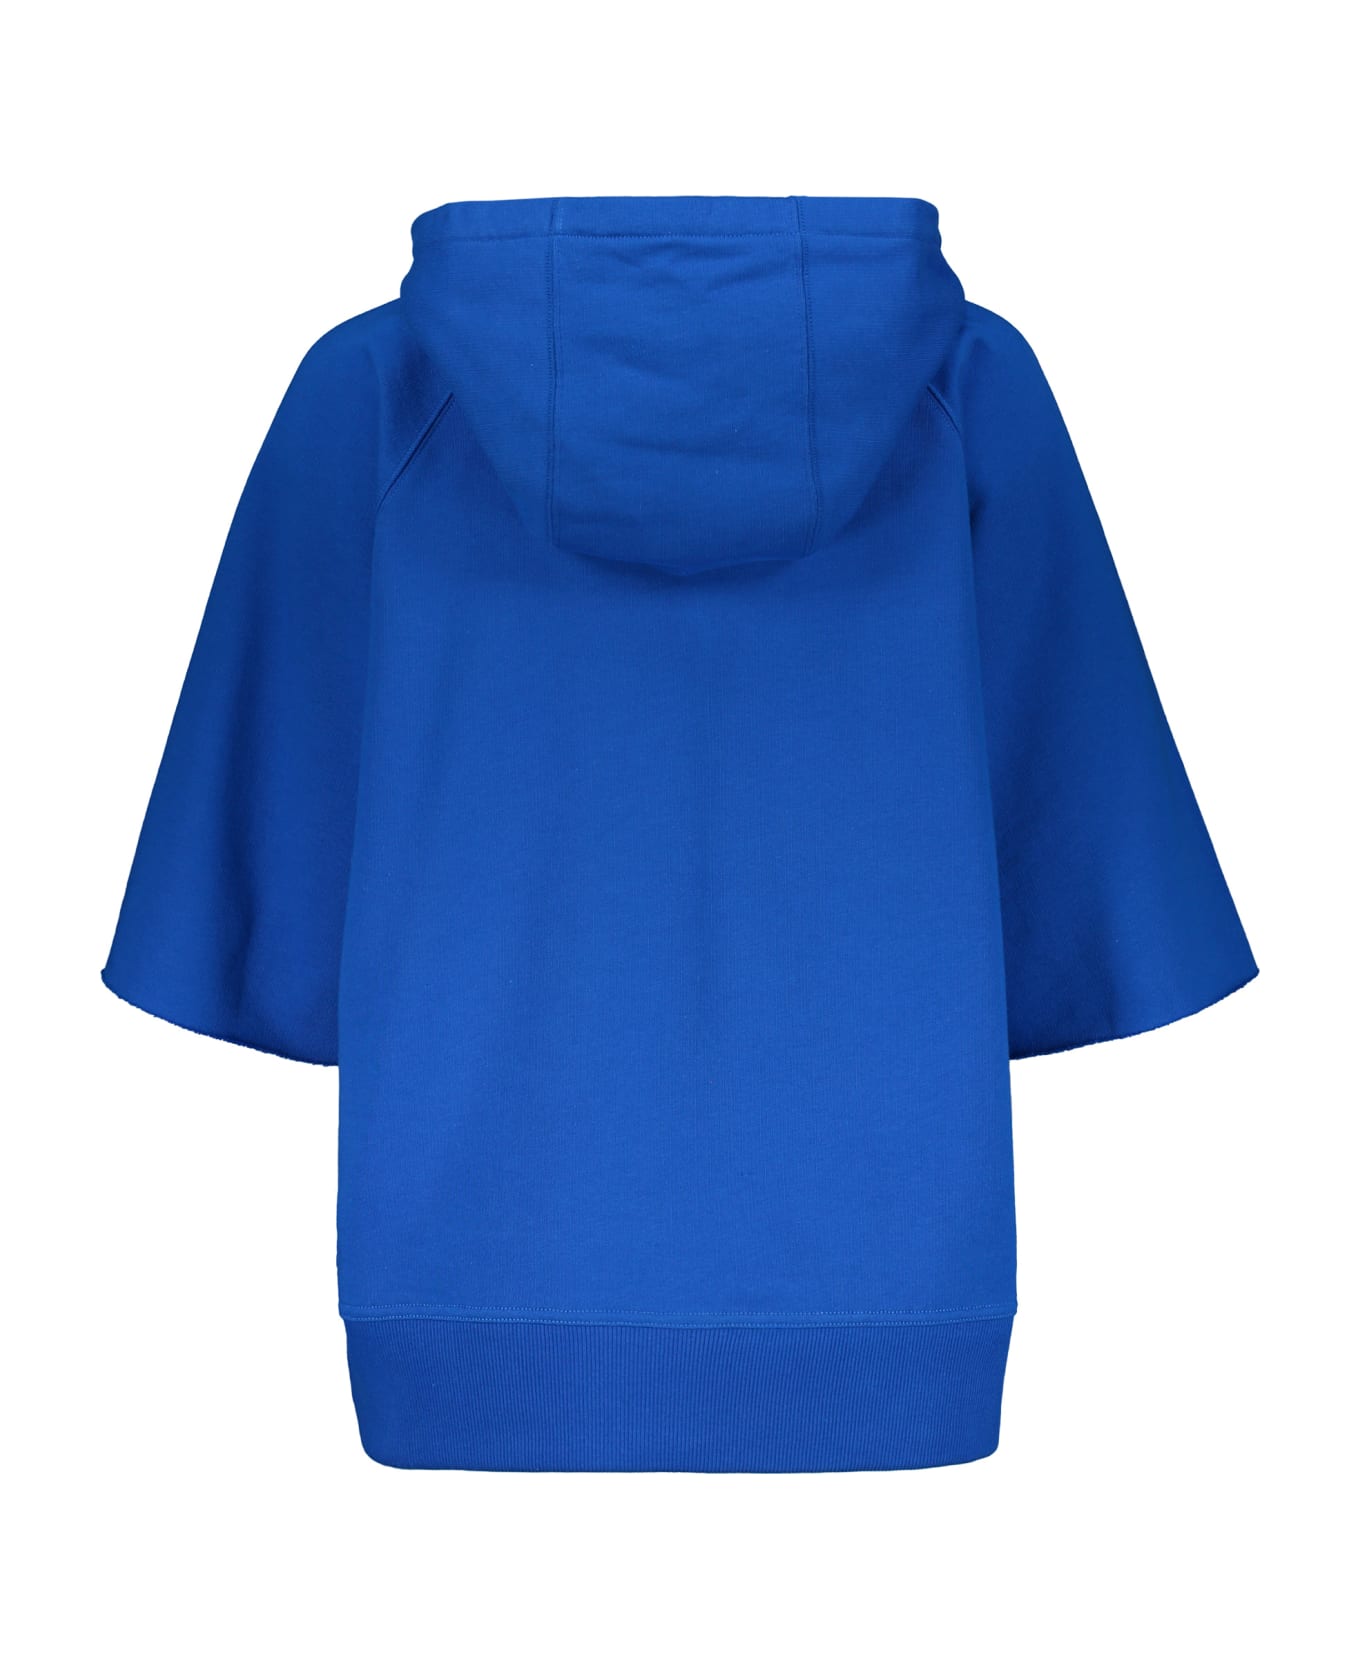 Burberry Short Sleeved Sweatshirt - blue フリース